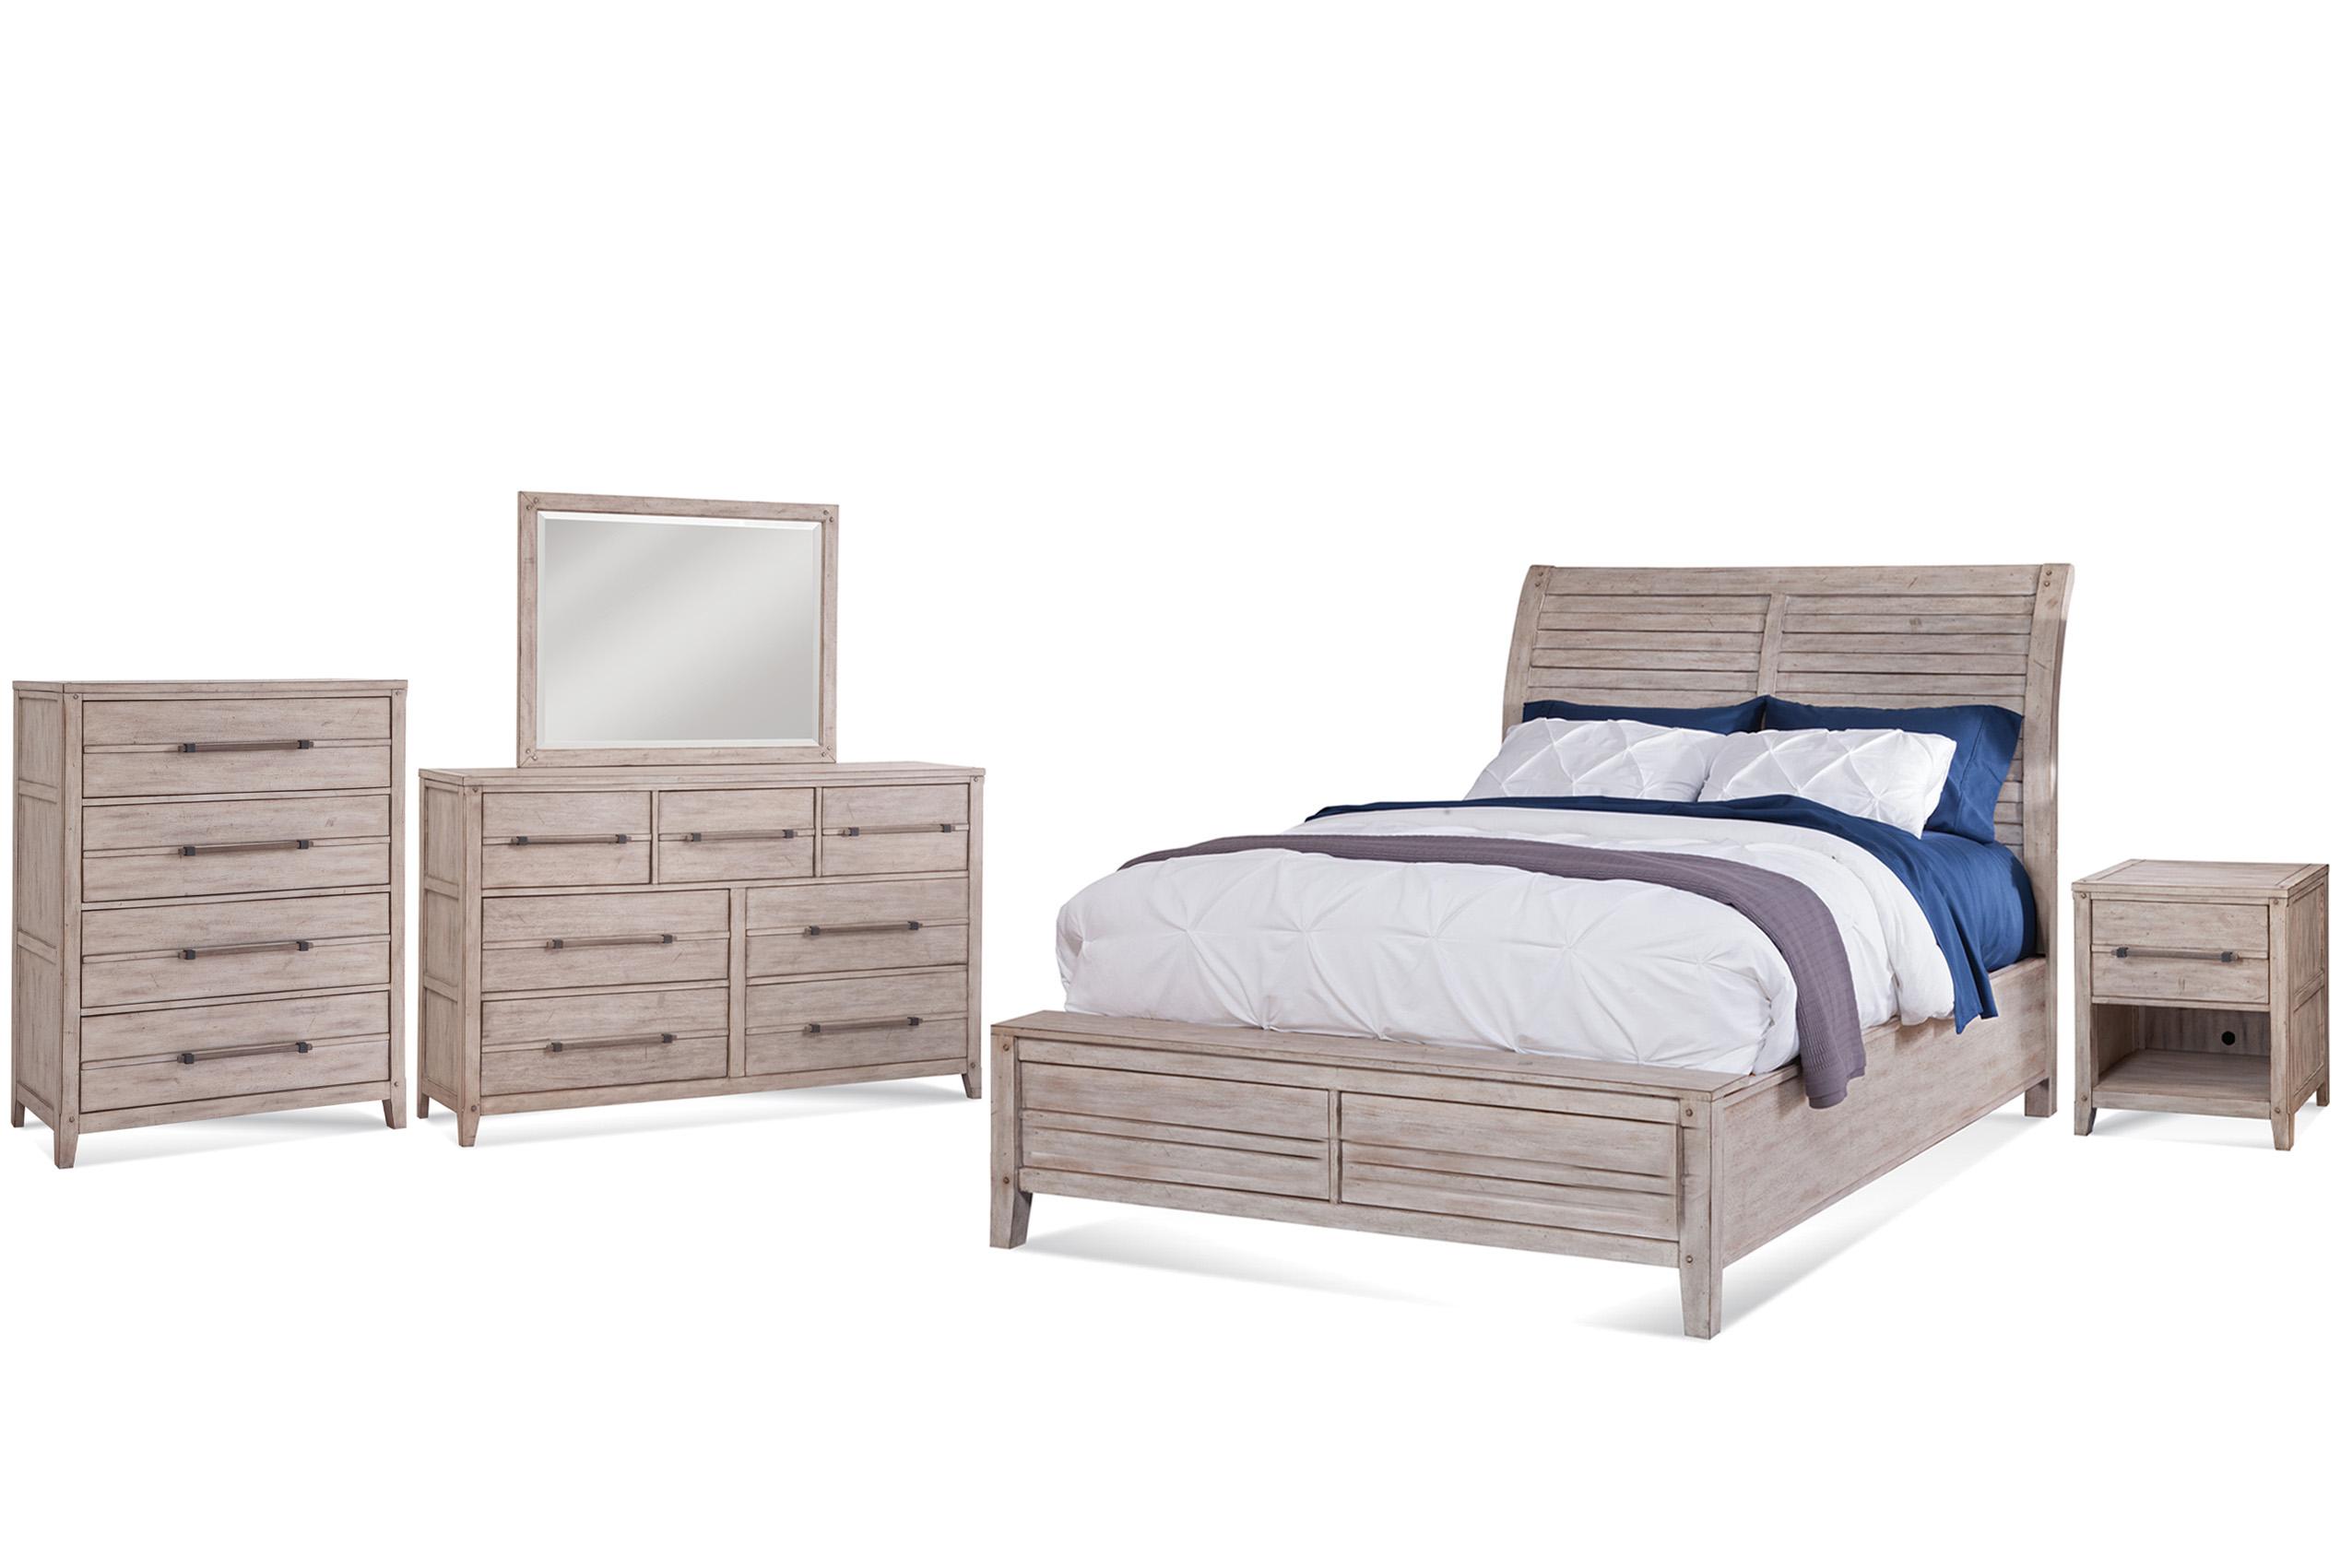 Classic, Traditional Sleigh Bedroom Set AURORA 2810-50SLP 2810-QSLPN-5PC in whitewash 